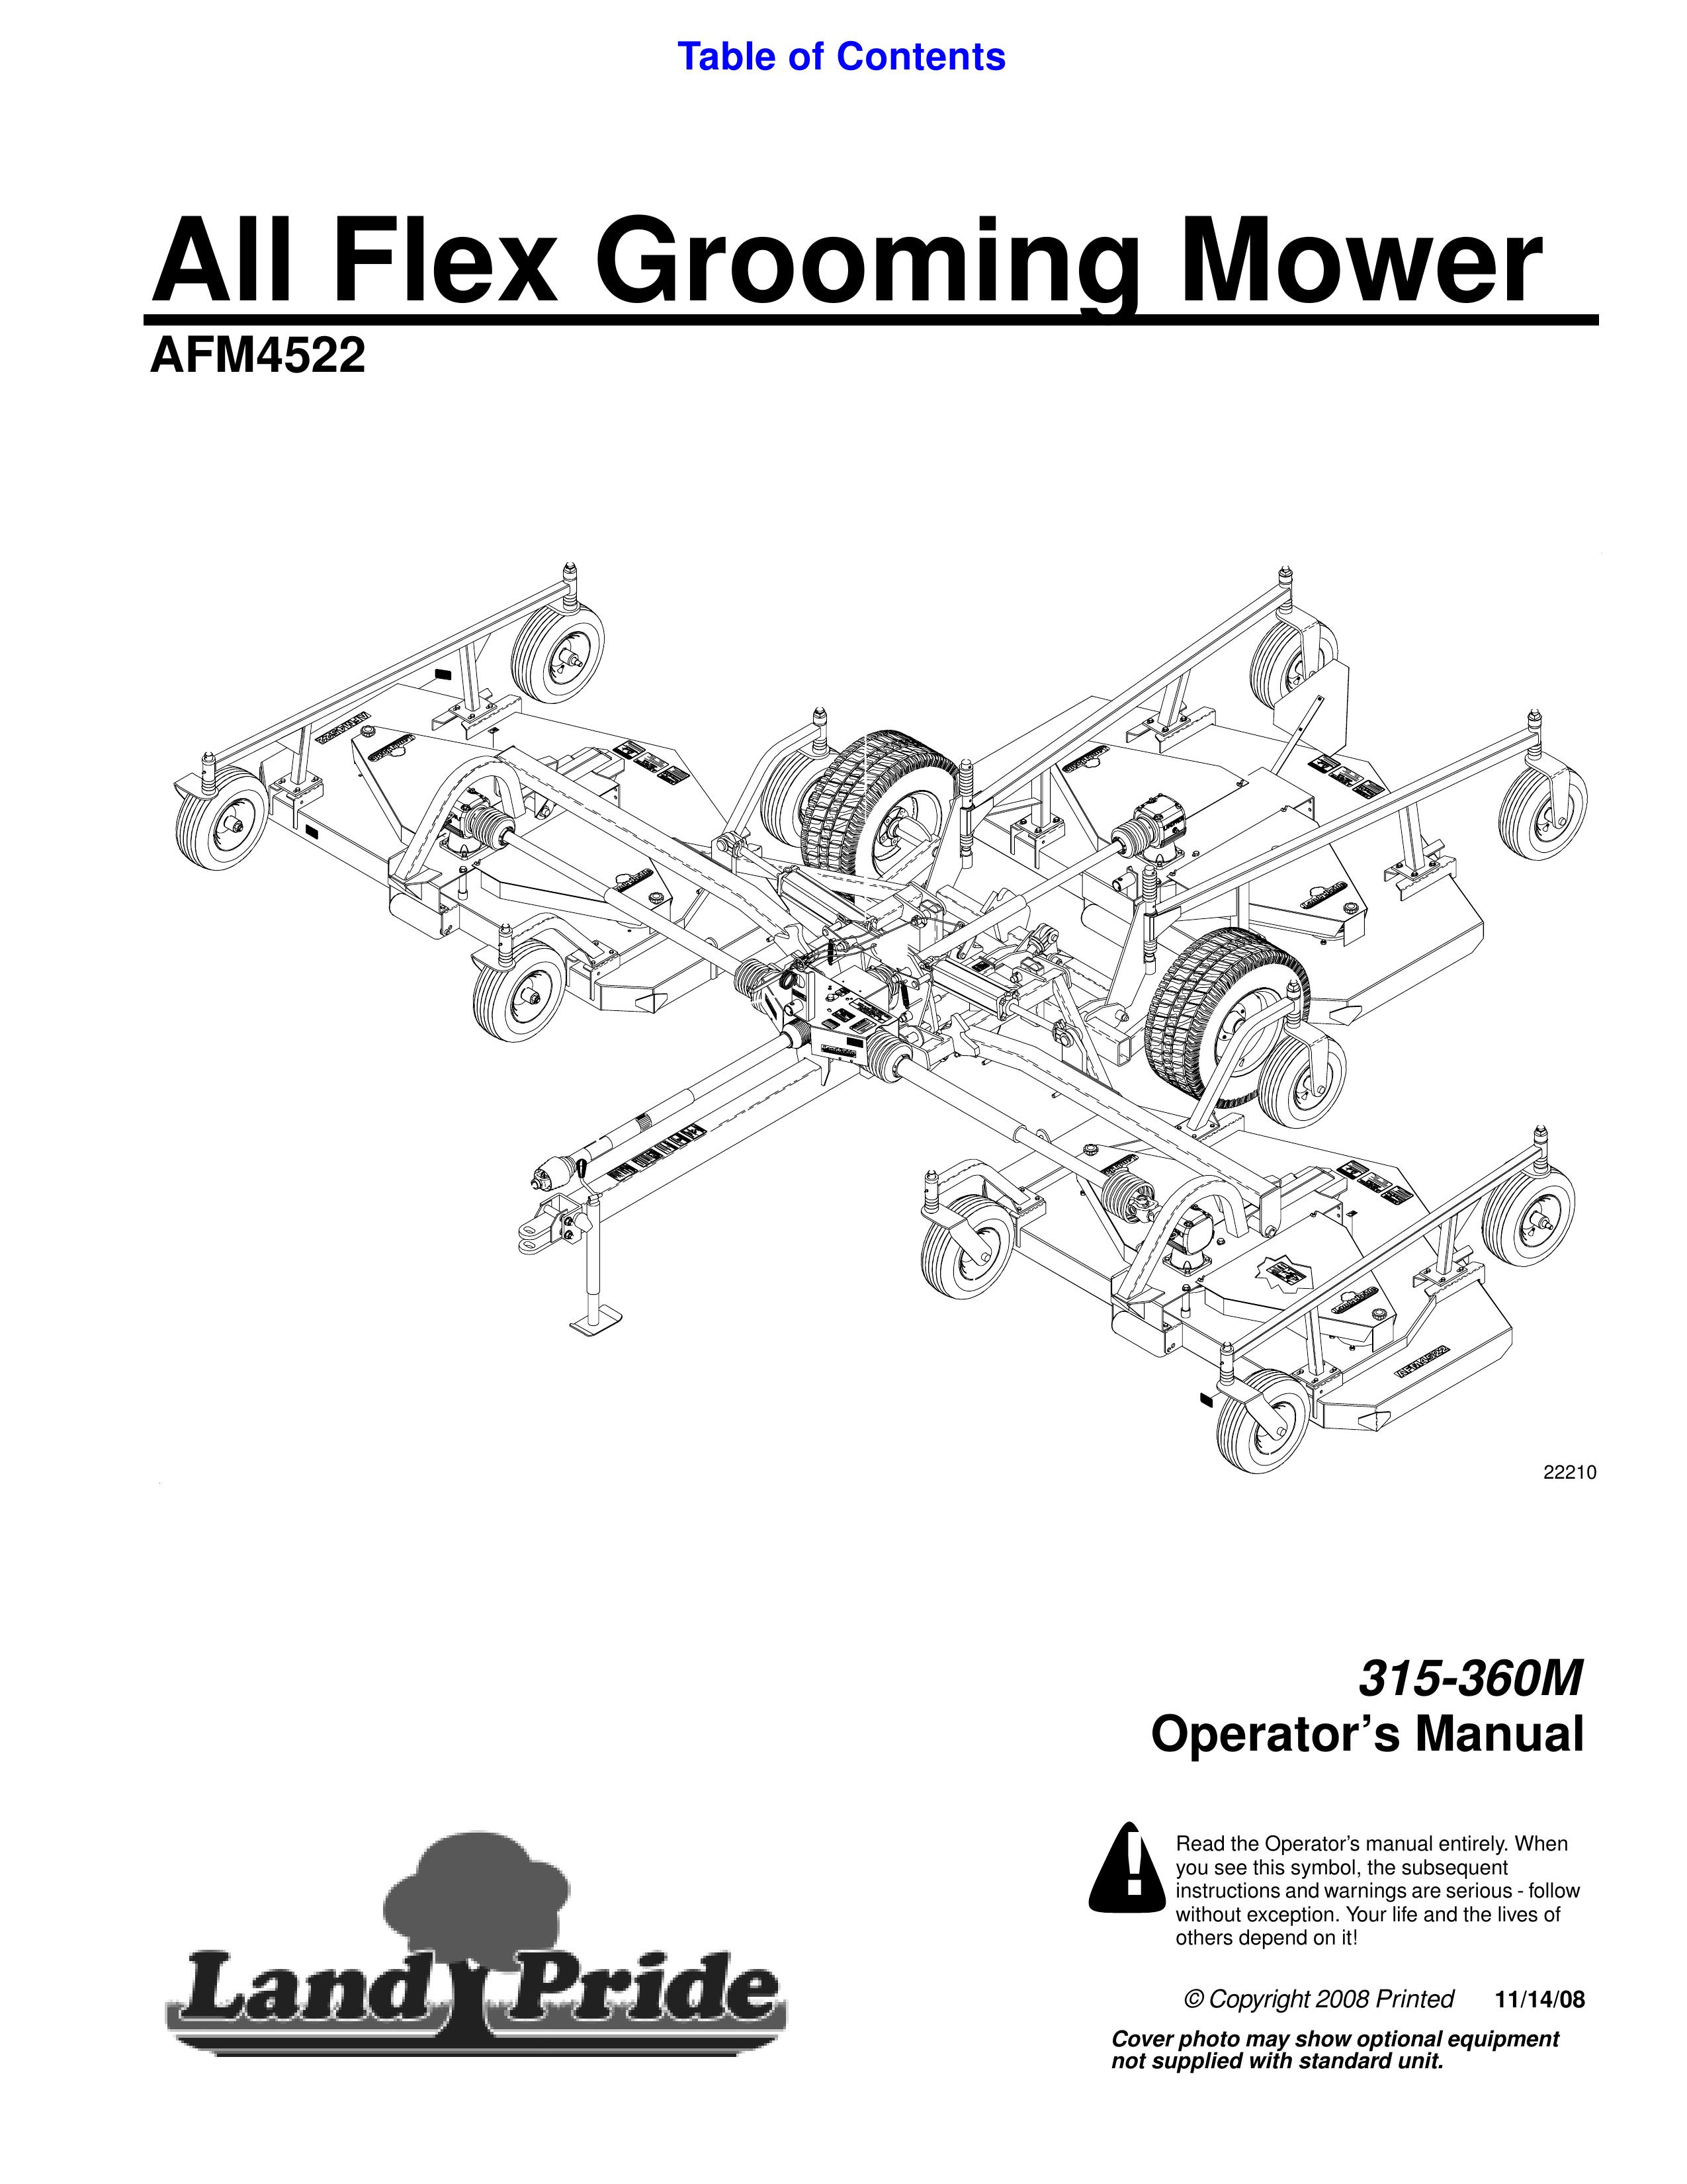 Land Pride AFM4522 Lawn Mower User Manual